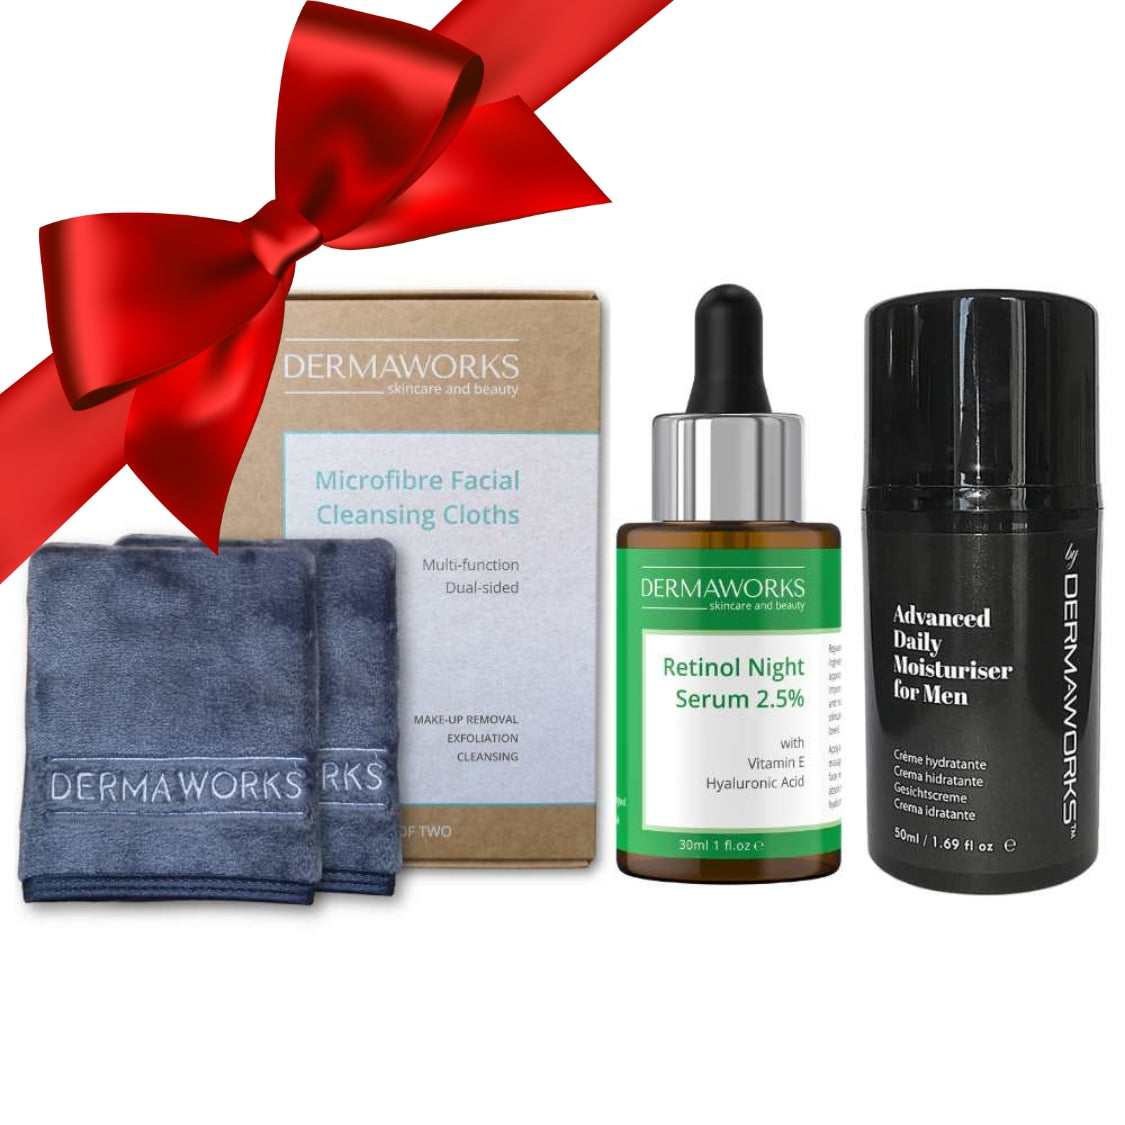 Dermaworks skincare gift set for men; flannel face cloths, retinol serum and expert face cream moisturiser 